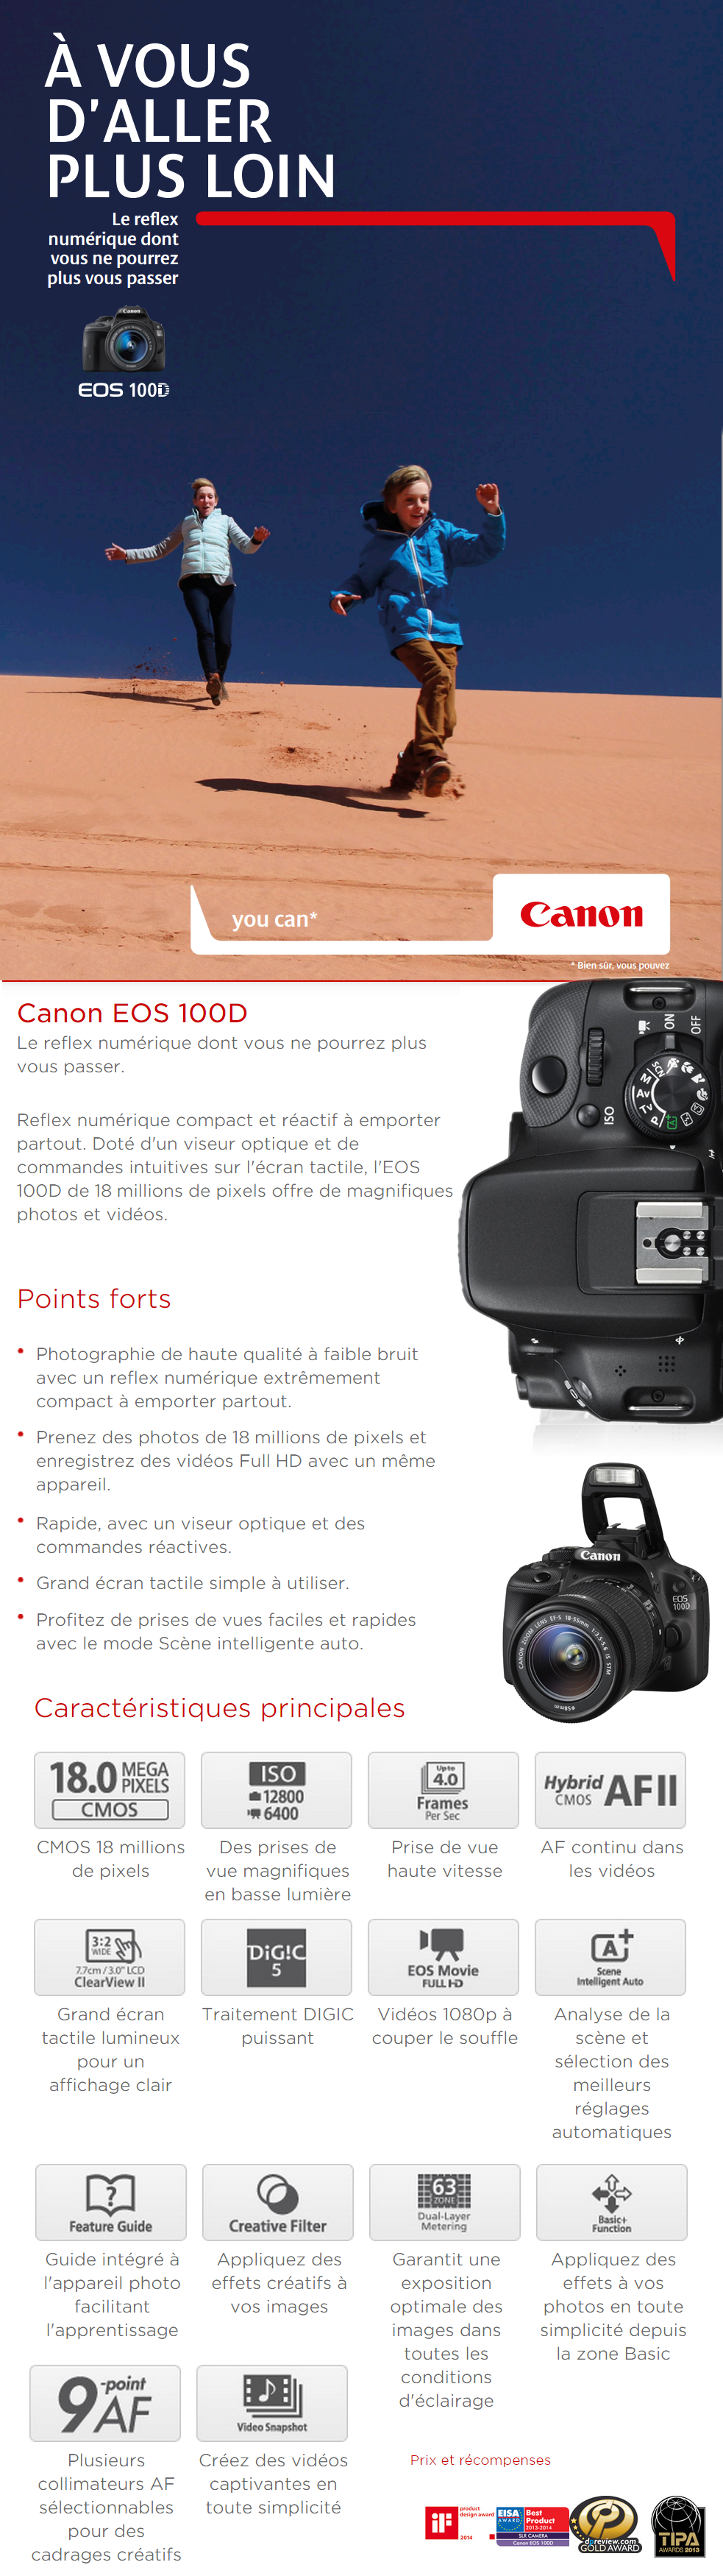 Acheter Reflex Canon EOS 100D + Objectif 18-55mm + Objectif 75-300mm + Imprimante Selphy CP910 + Sac à messenger Vanguard Maroc